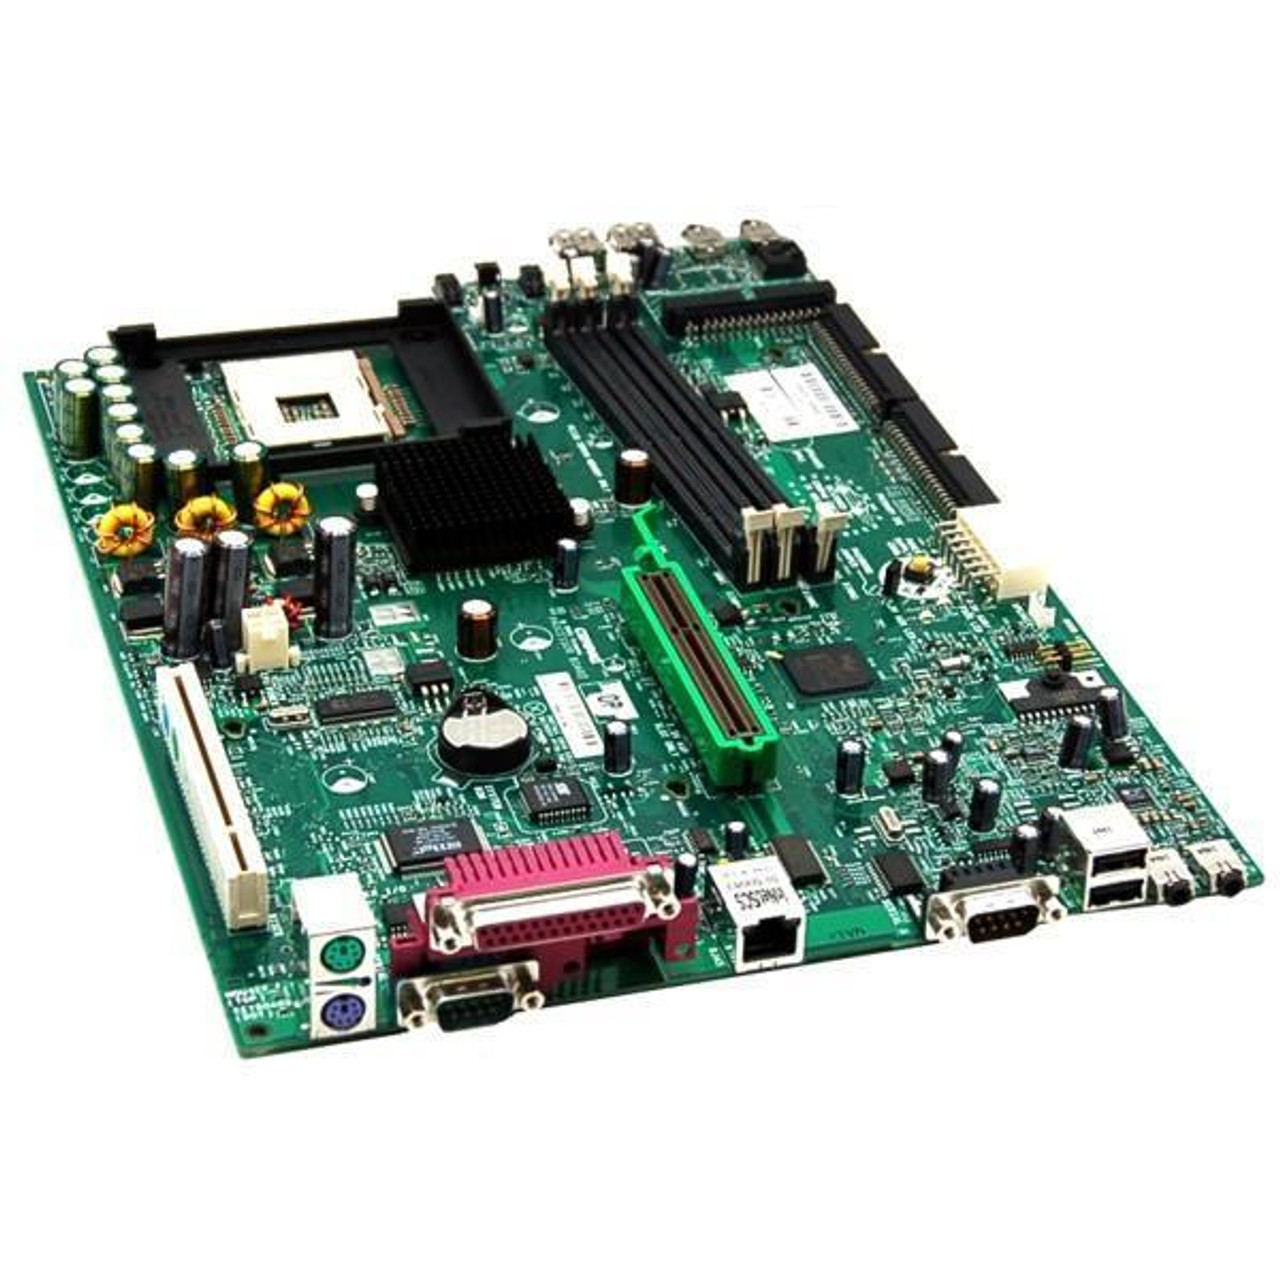 277499-001-06 HP System Board (MotherBoard) Socket-478 for EVO D500 Series SFF Desktop PC (Refurbished)